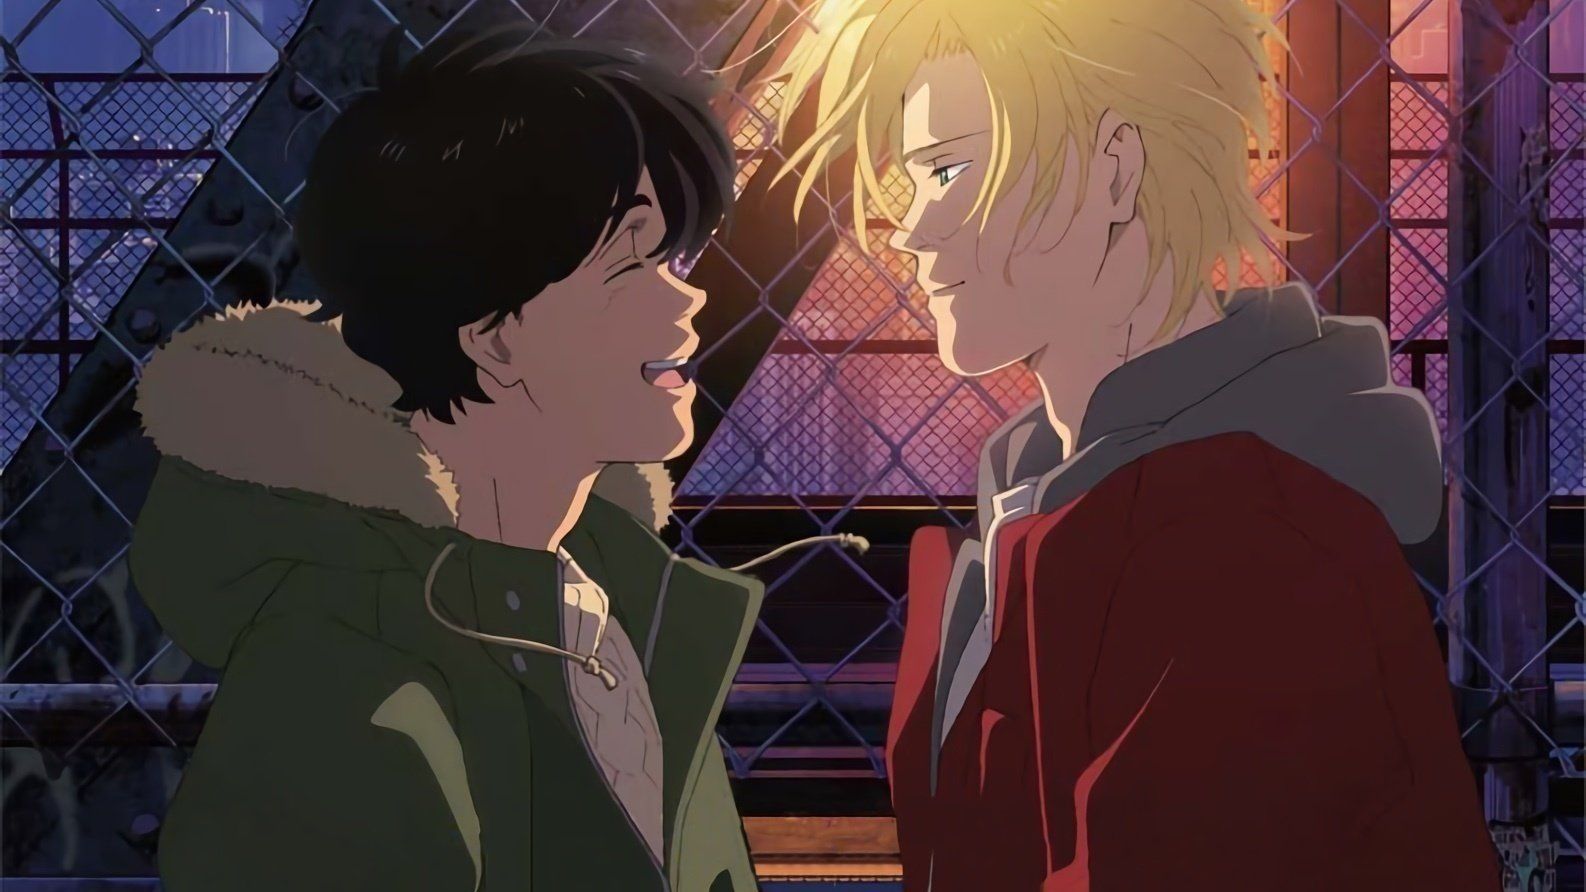 Hot gay anime scenes